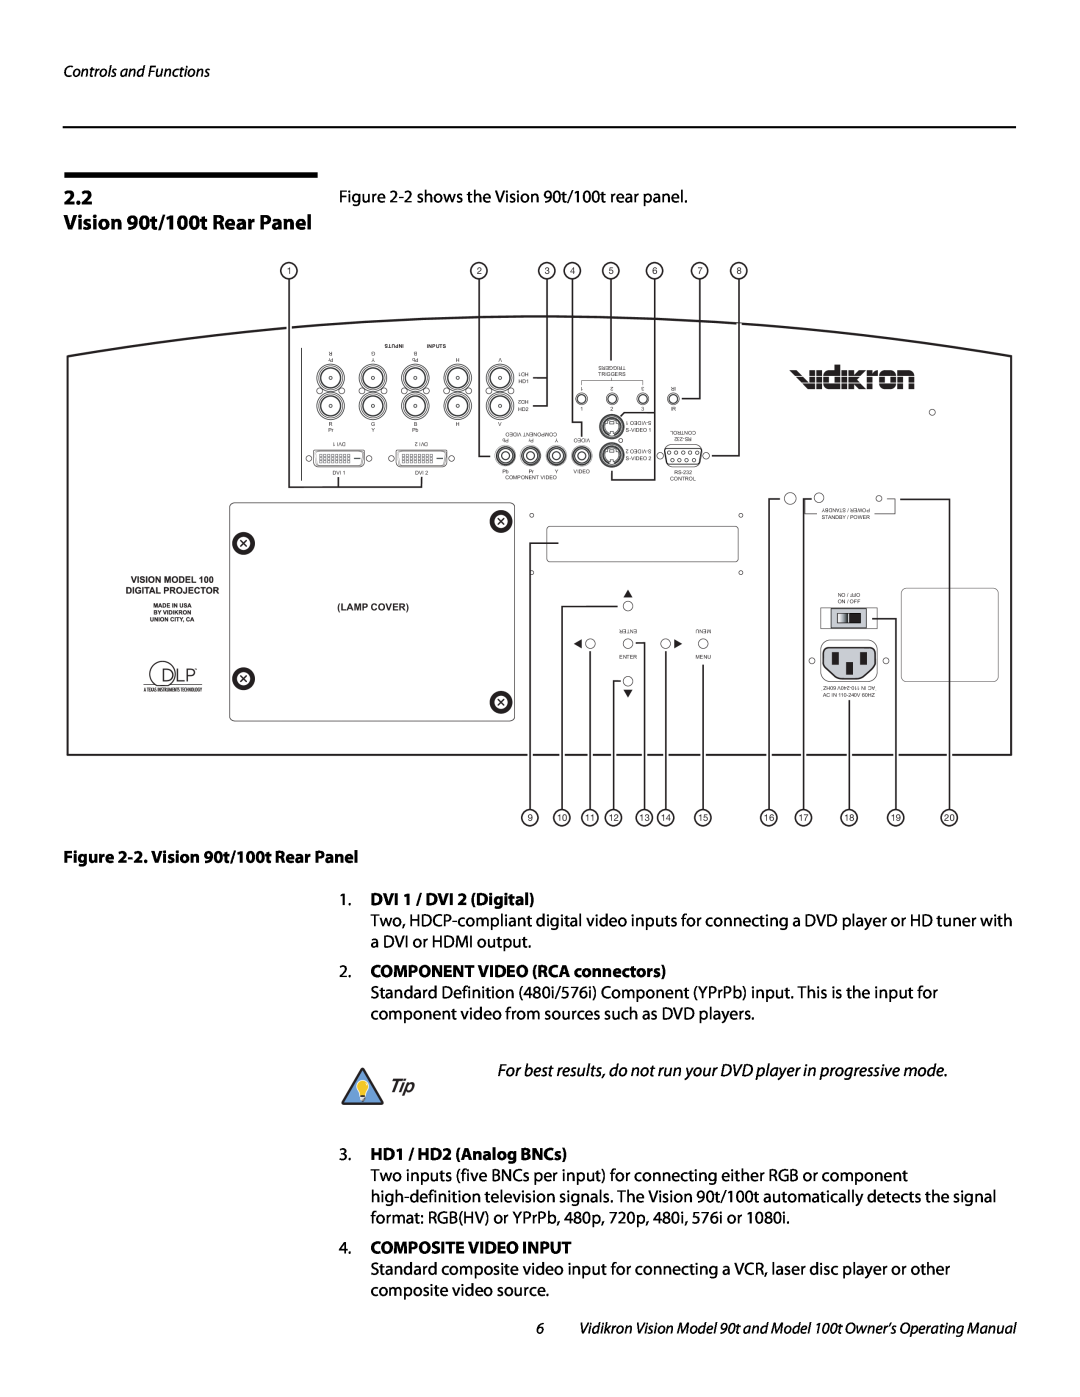 Vidikron Vision 100t manual 2. Vision 90t/100t Rear Panel 1. DVI 1 / DVI 2 Digital, COMPONENT VIDEO RCA connectors 